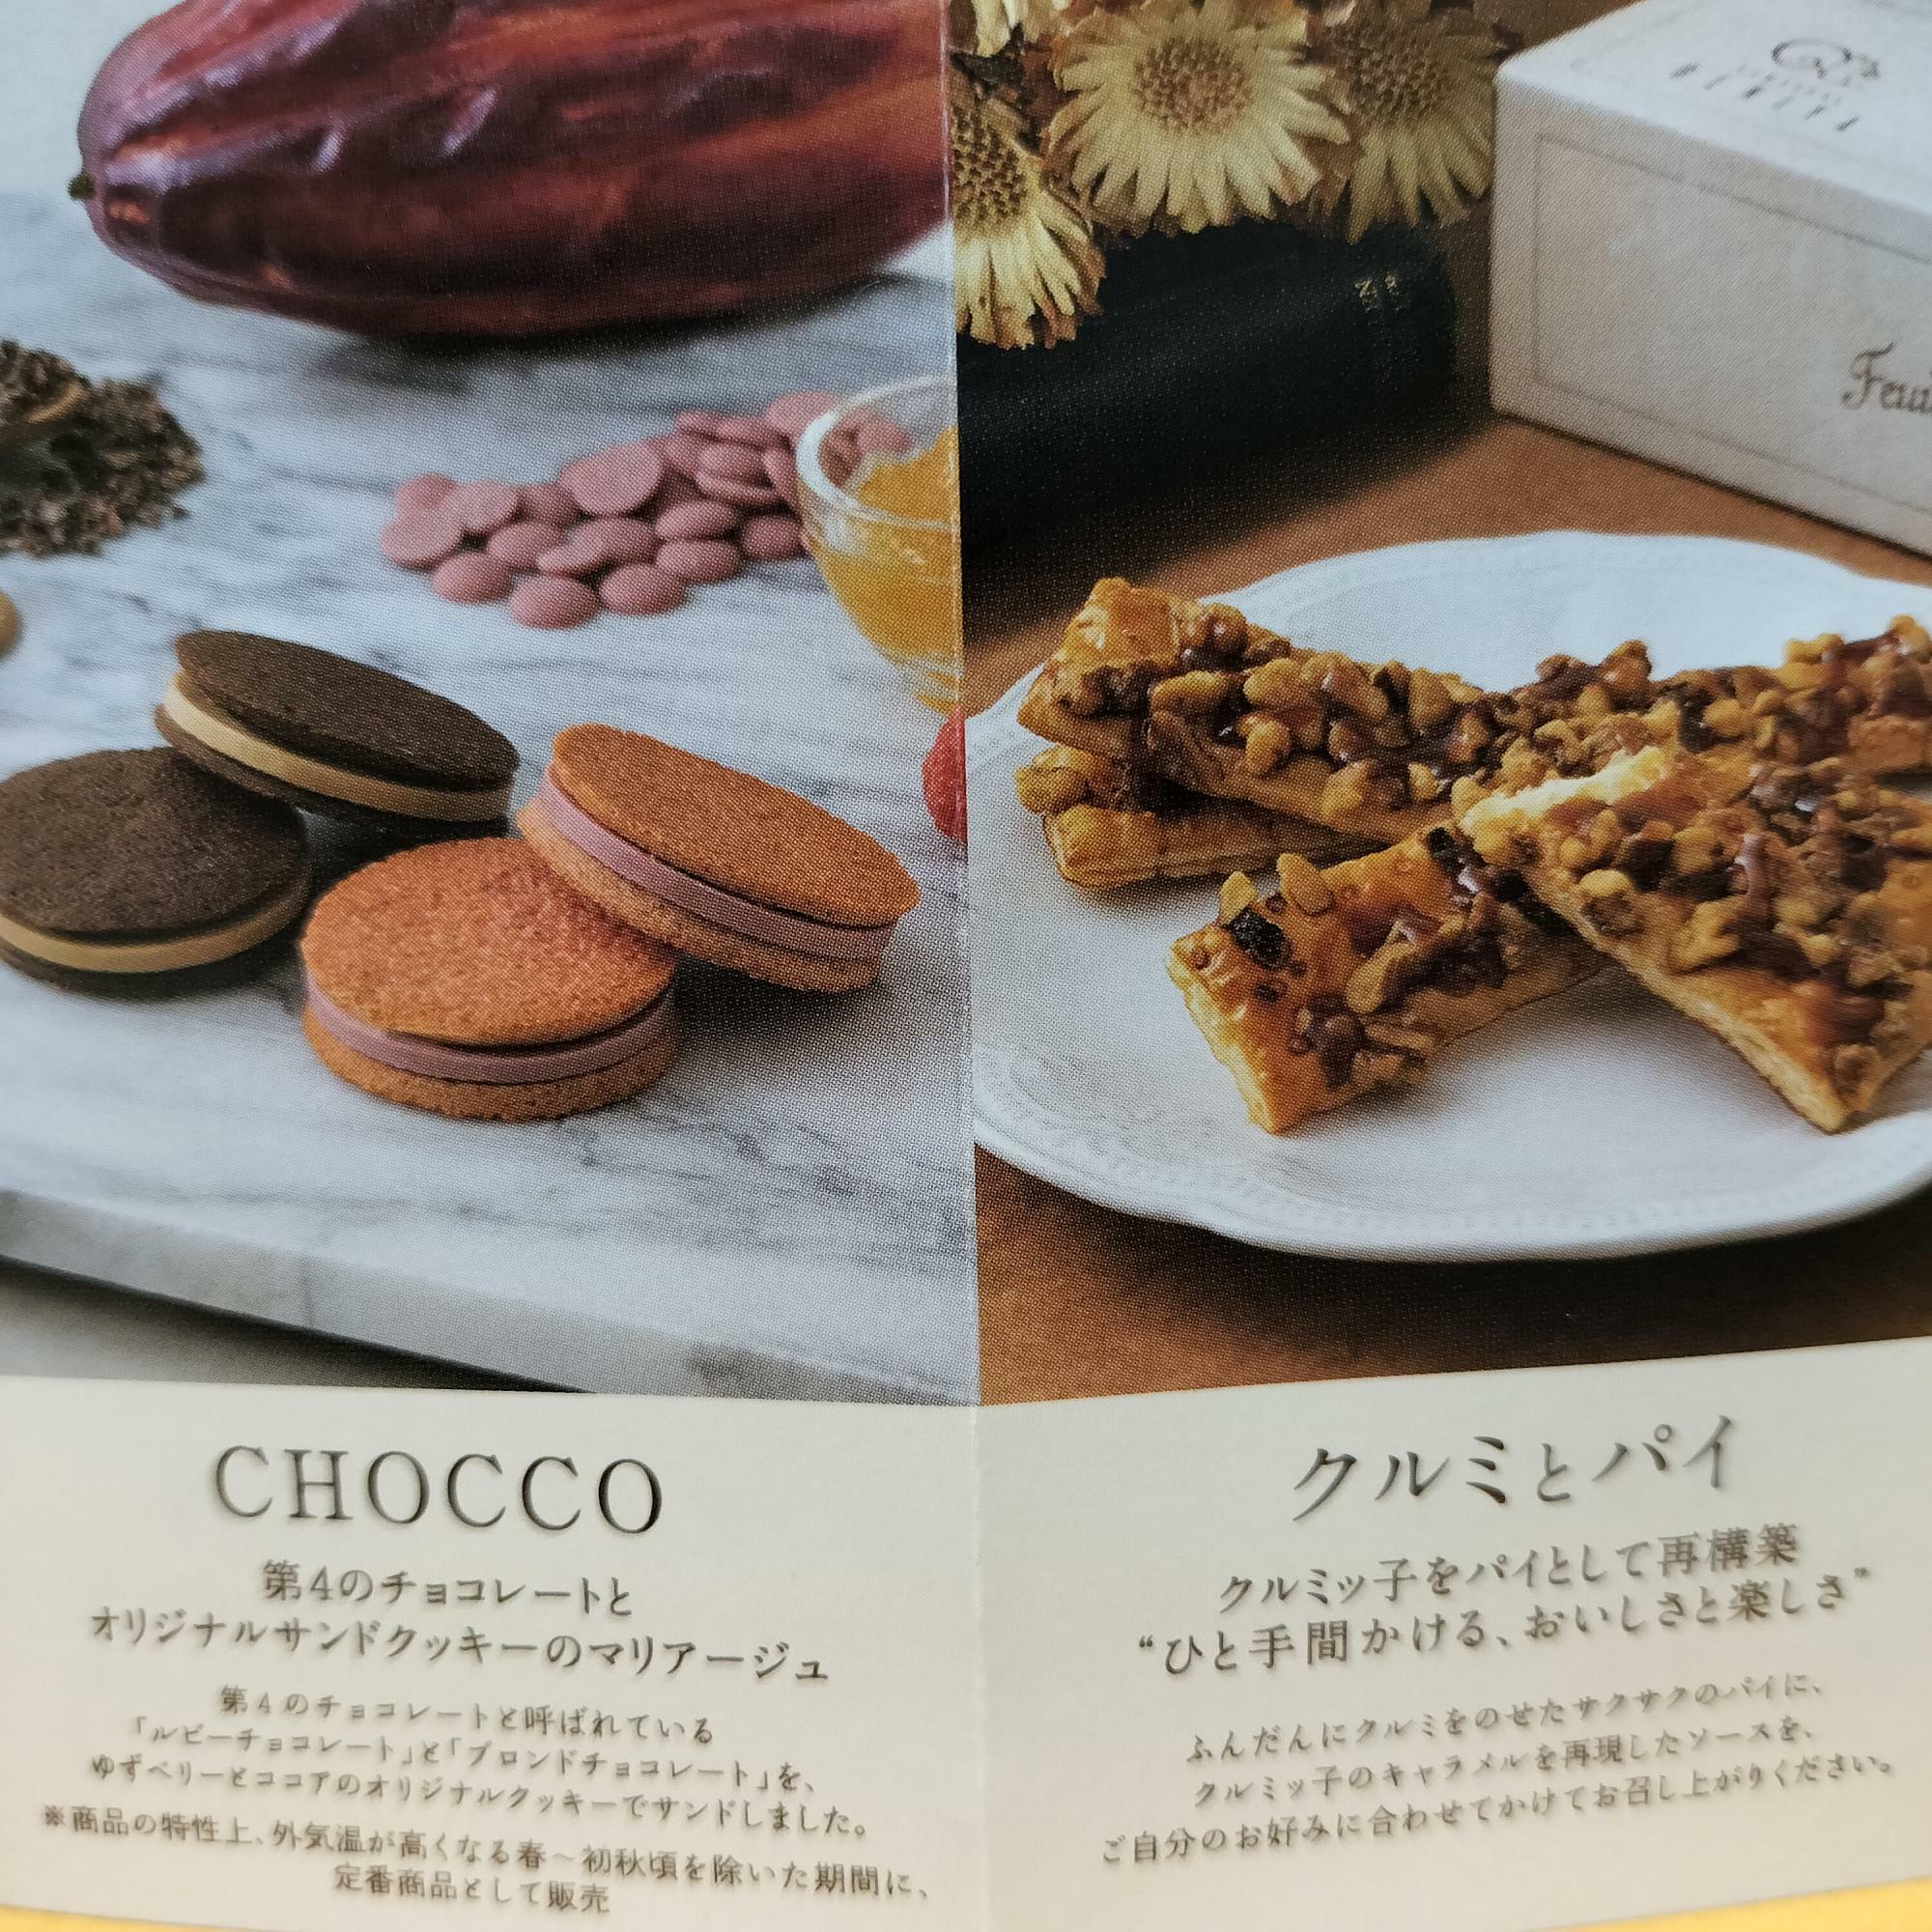 「CHOCCO」は福袋に入っていておいしさに驚いた逸品！「クルミとパイ」は今回初購入